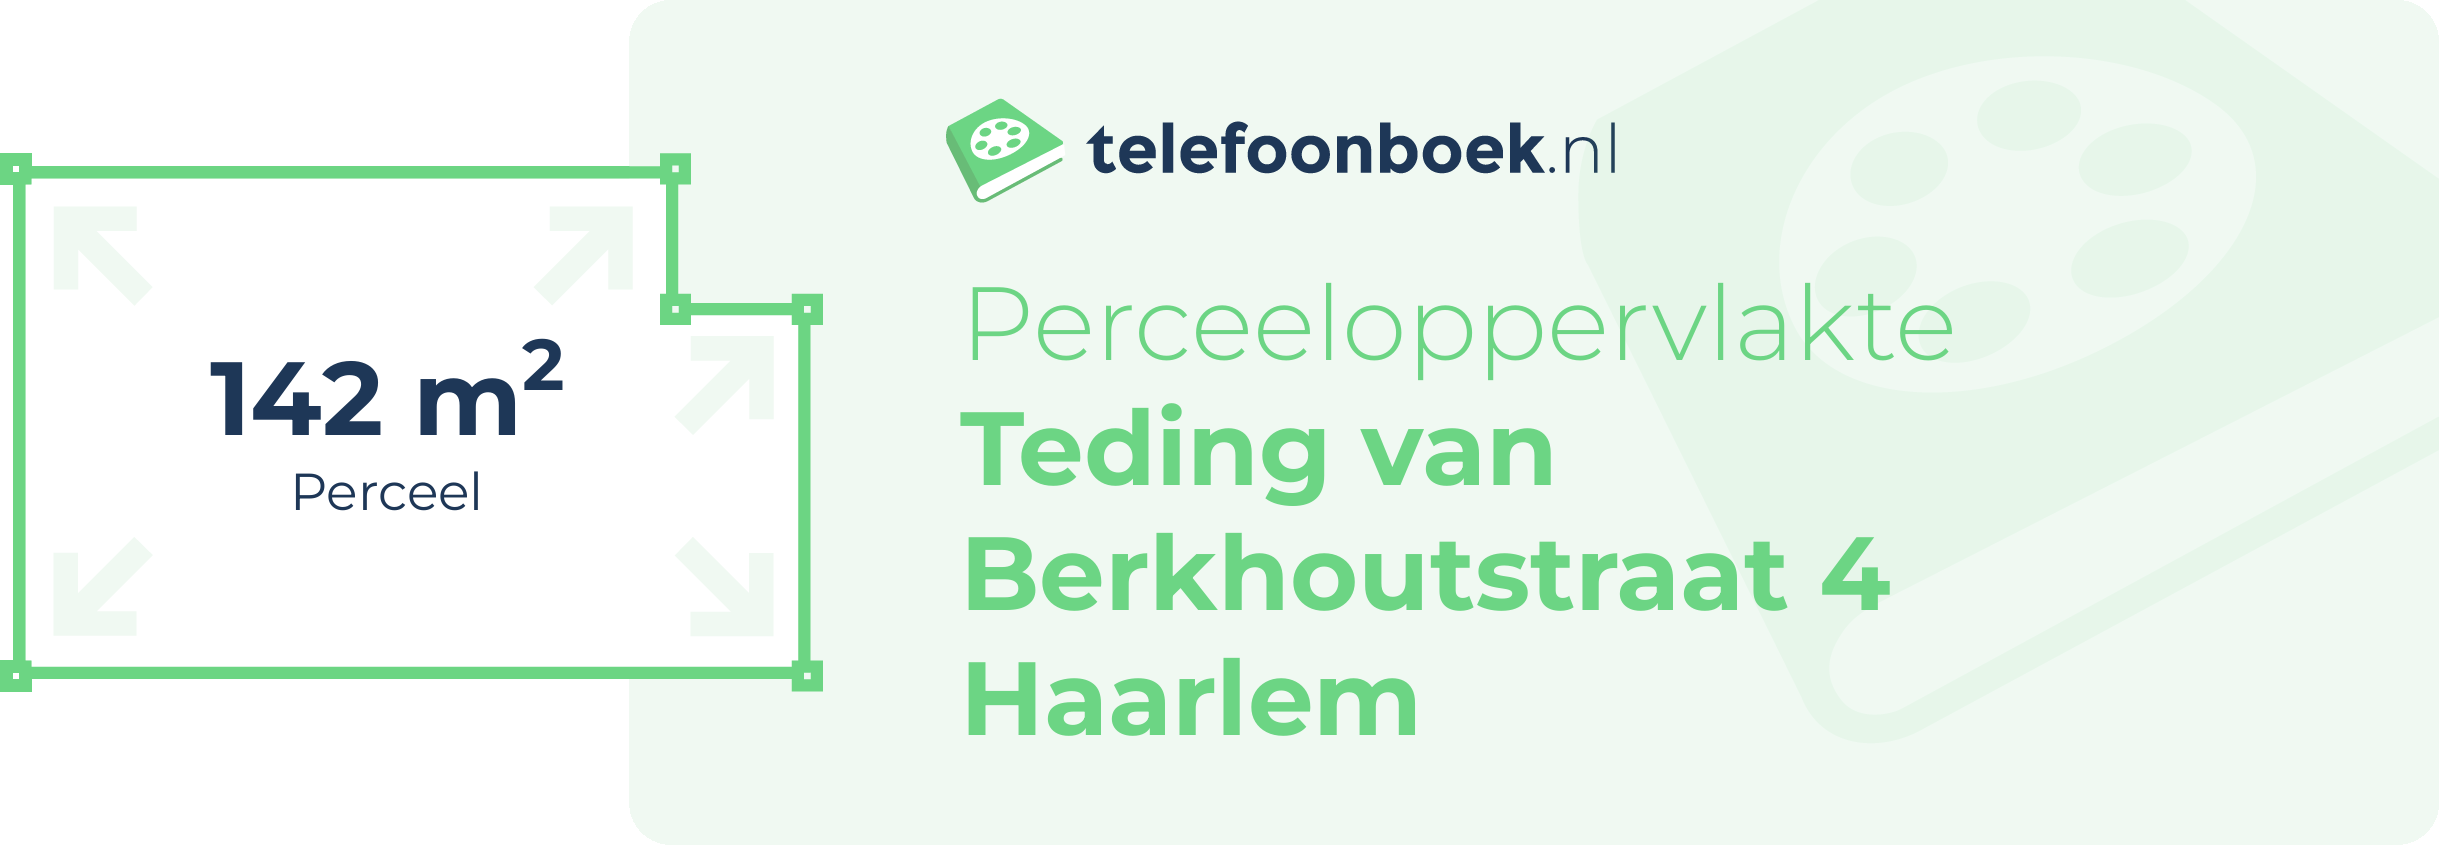 Perceeloppervlakte Teding Van Berkhoutstraat 4 Haarlem